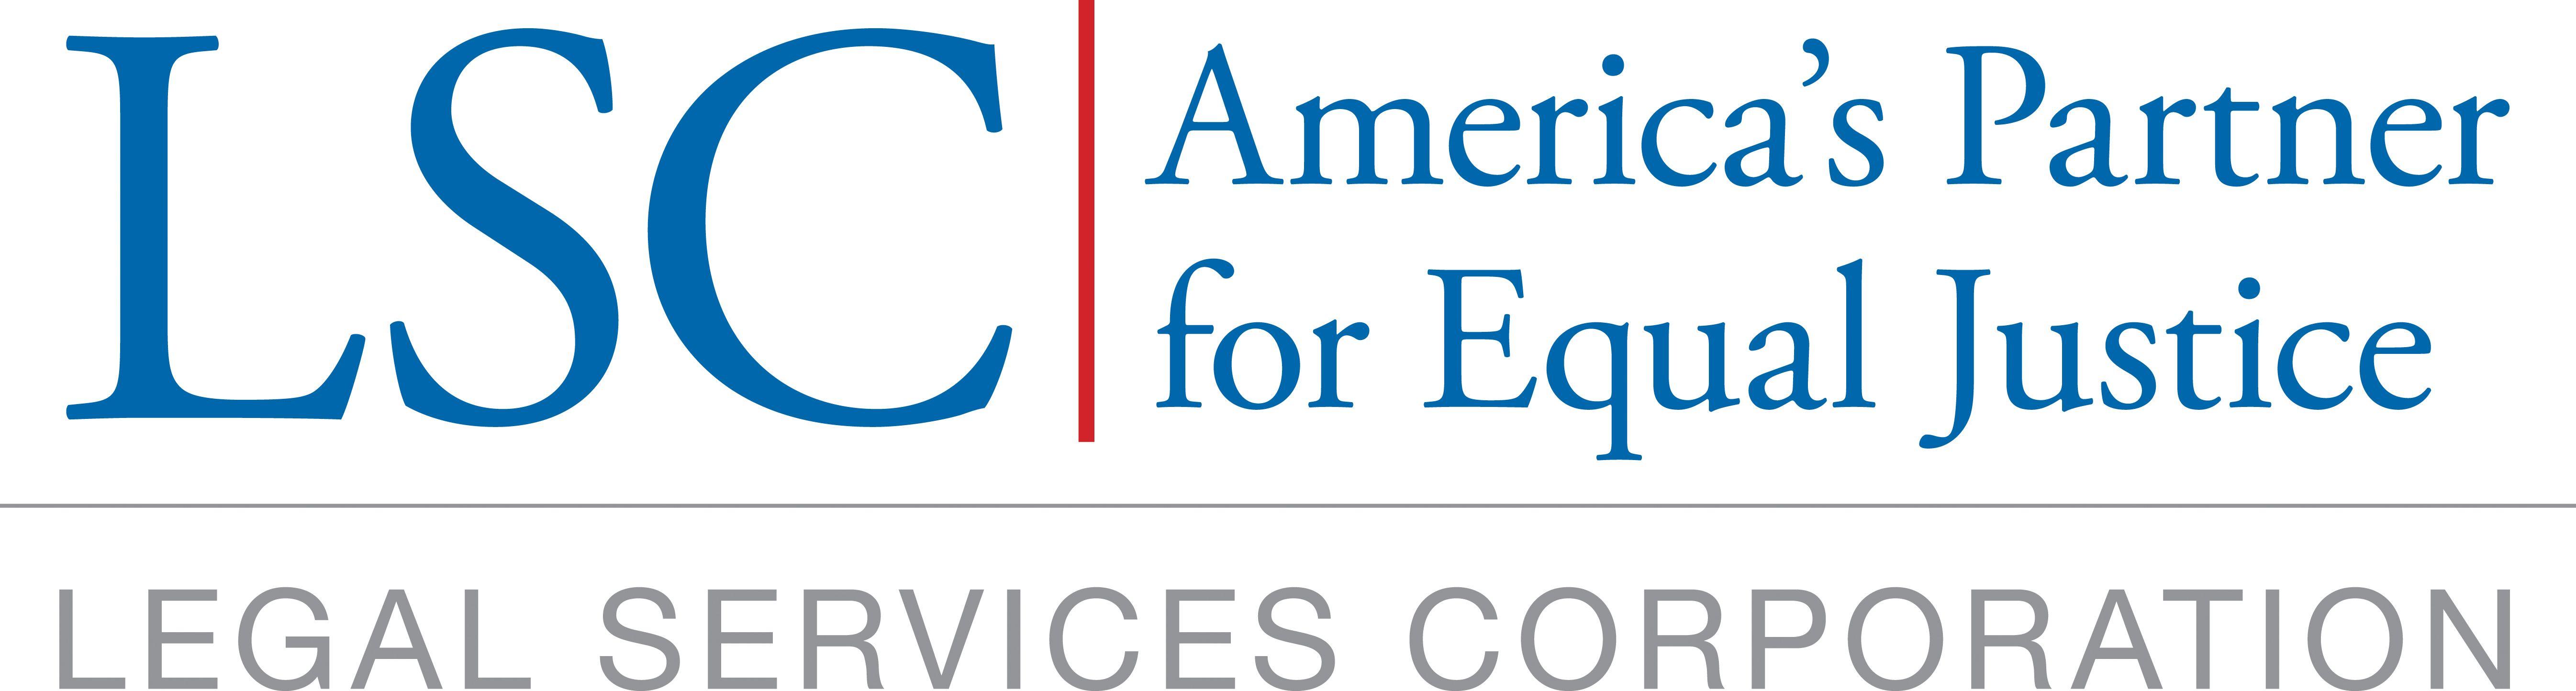 Legal Service Logo - Media Assets. LSC Services Corporation: America's Partner